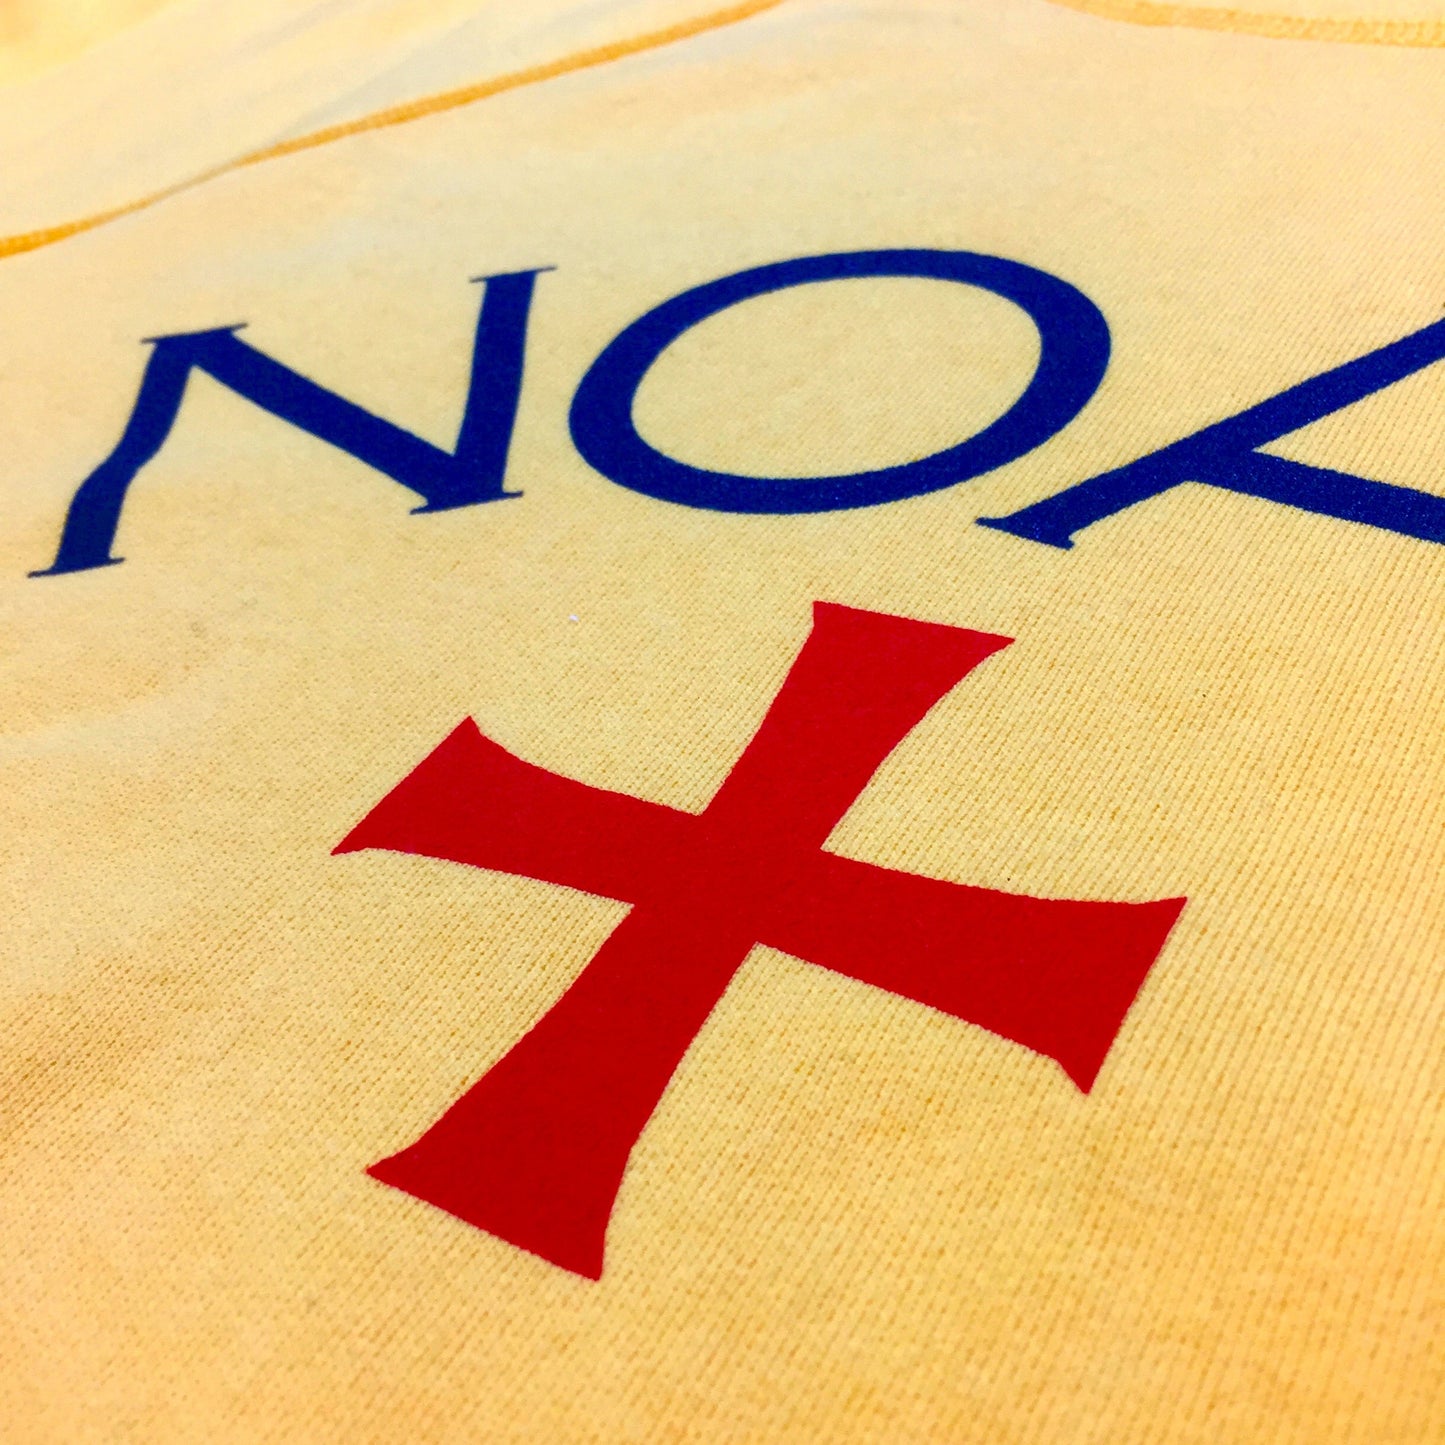 Noah - Yellow Core Logo Crewneck Sweatshirt